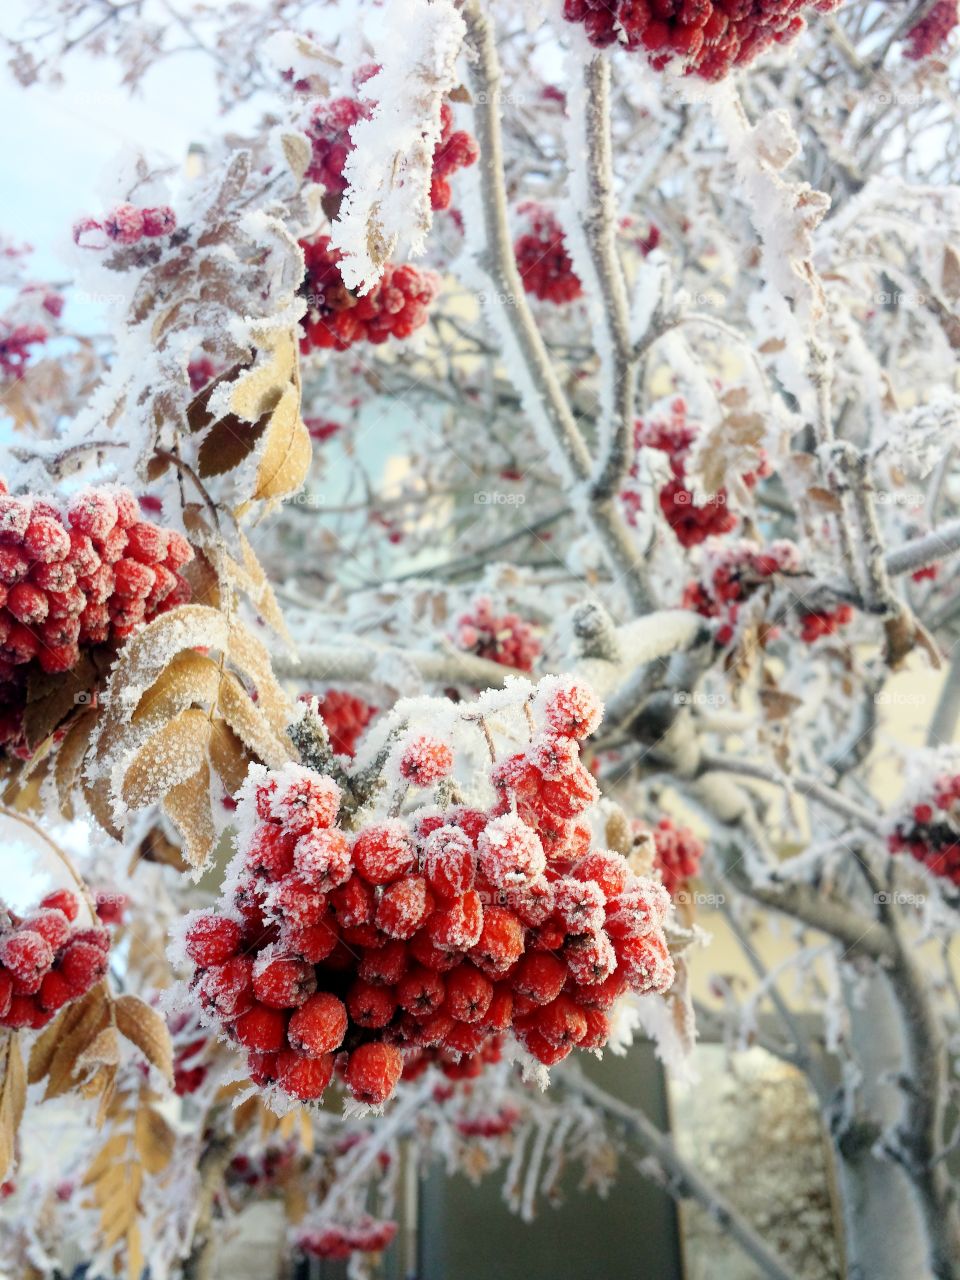 Frozen Mountain Ash berries